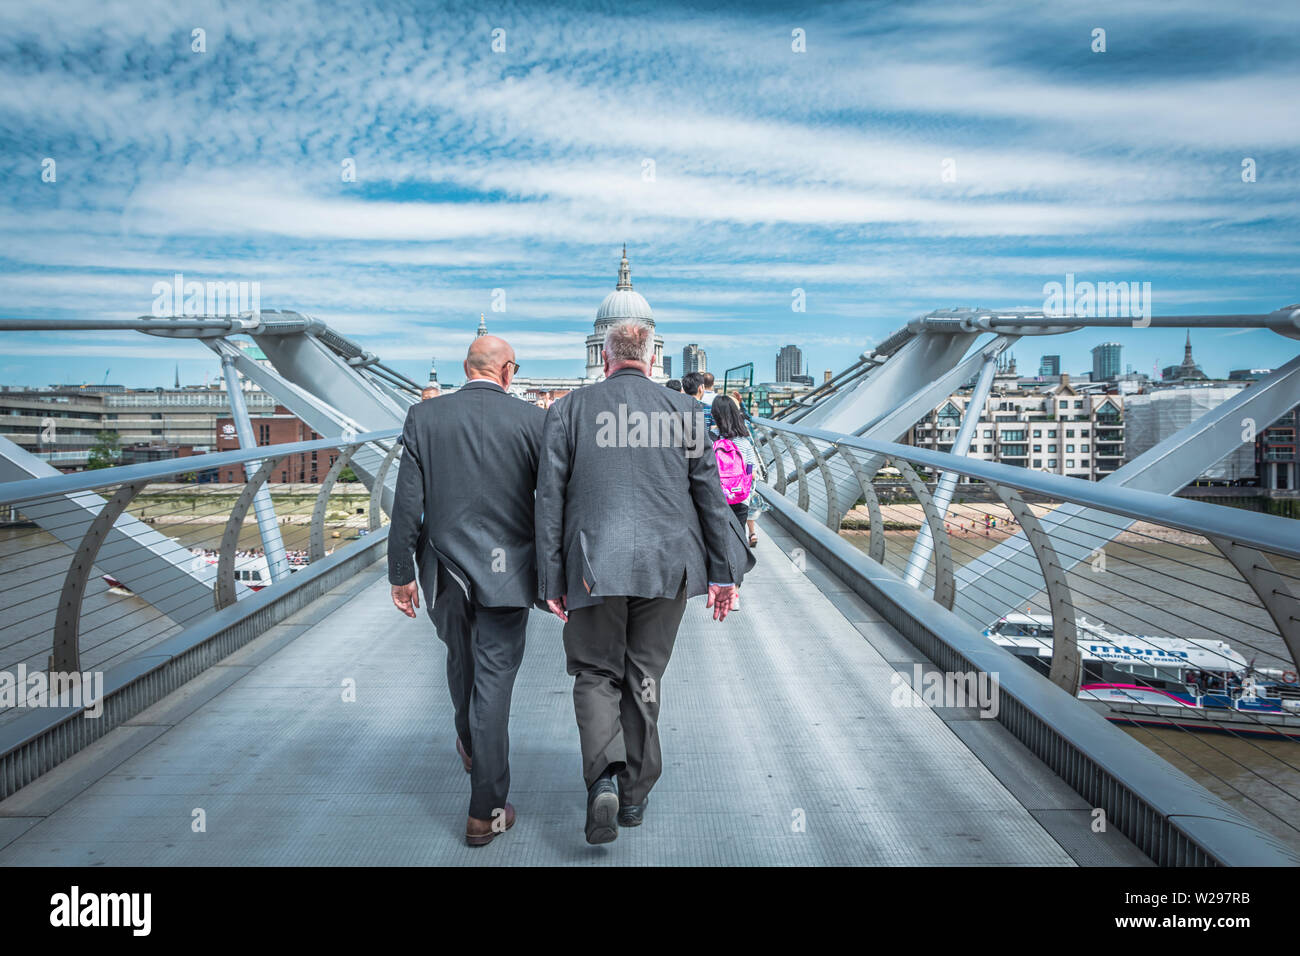 Two middle-aged men, wearing grey suits, walking across the Millennium Bridge (Blade of Light), London, England, UK Stock Photo